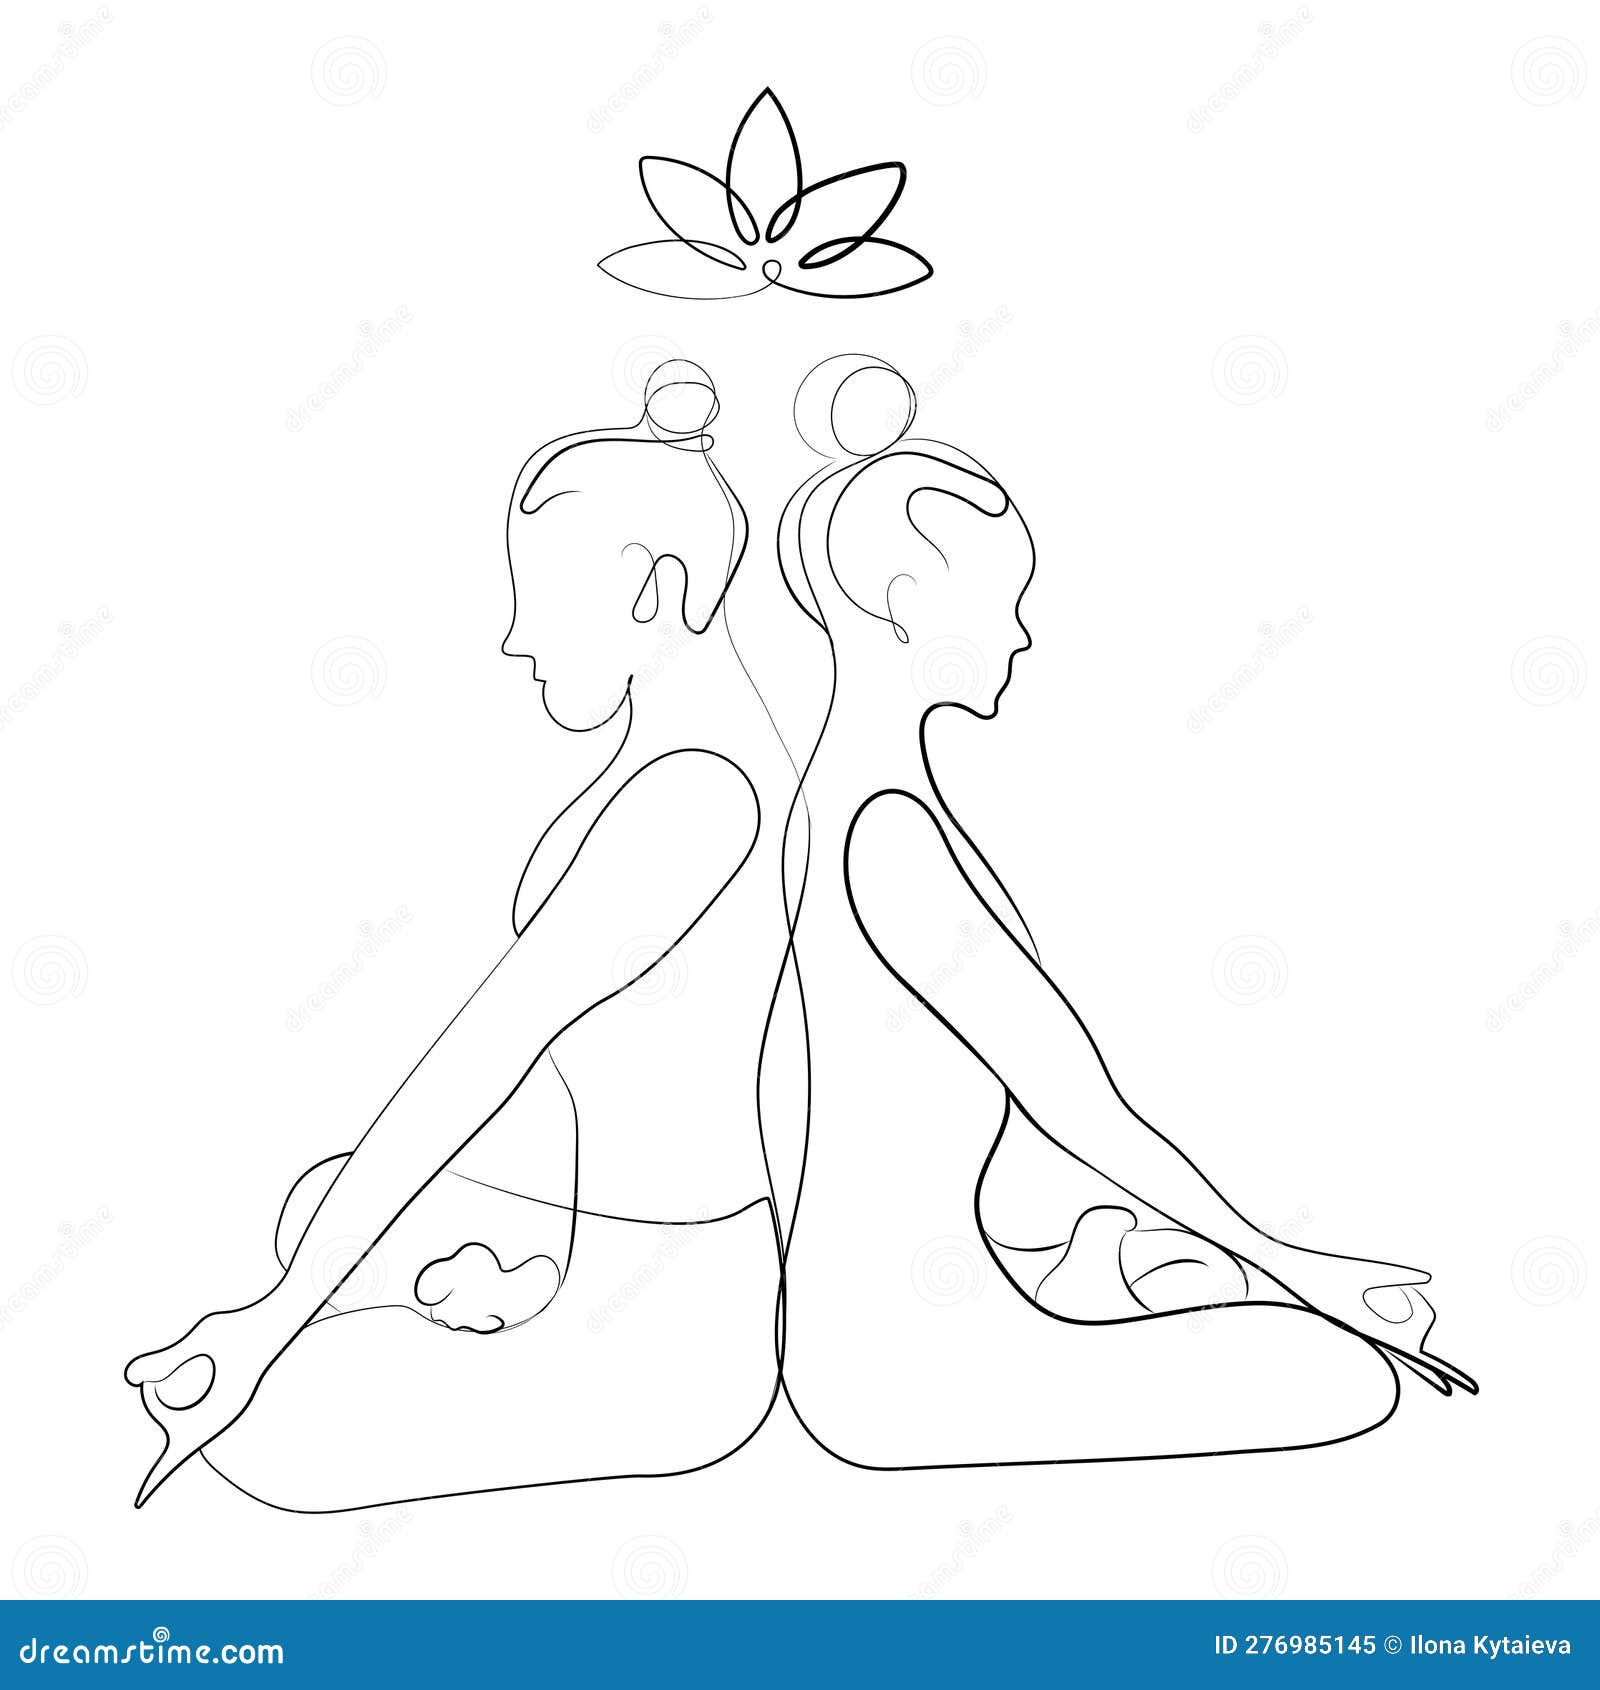 Meditation Sketch Stock Vector Illustration and Royalty Free Meditation  Sketch Clipart